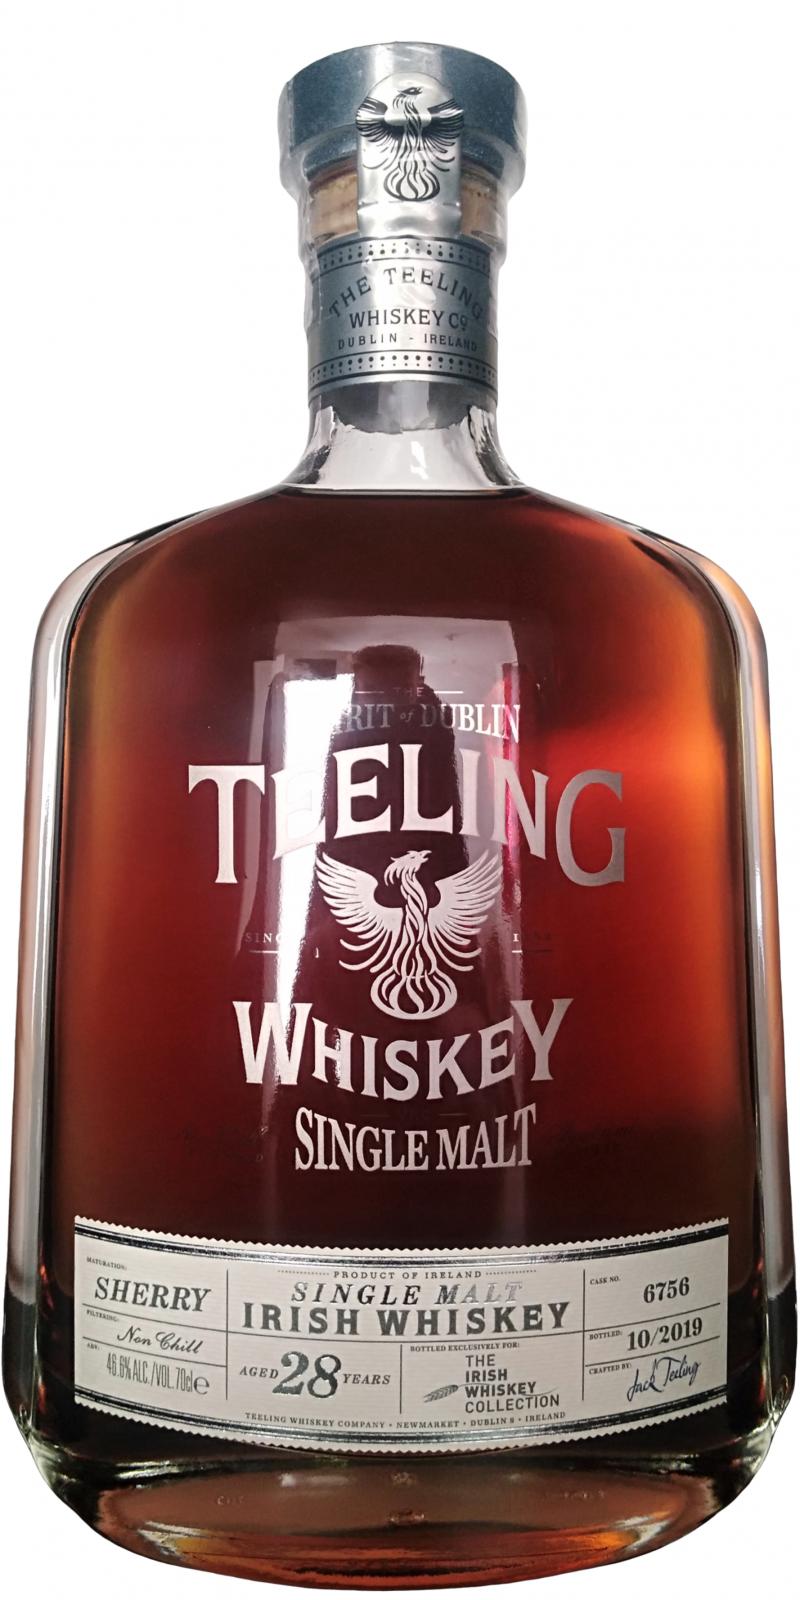 Teeling Single Pot Still - Ratings and reviews - Whiskybase